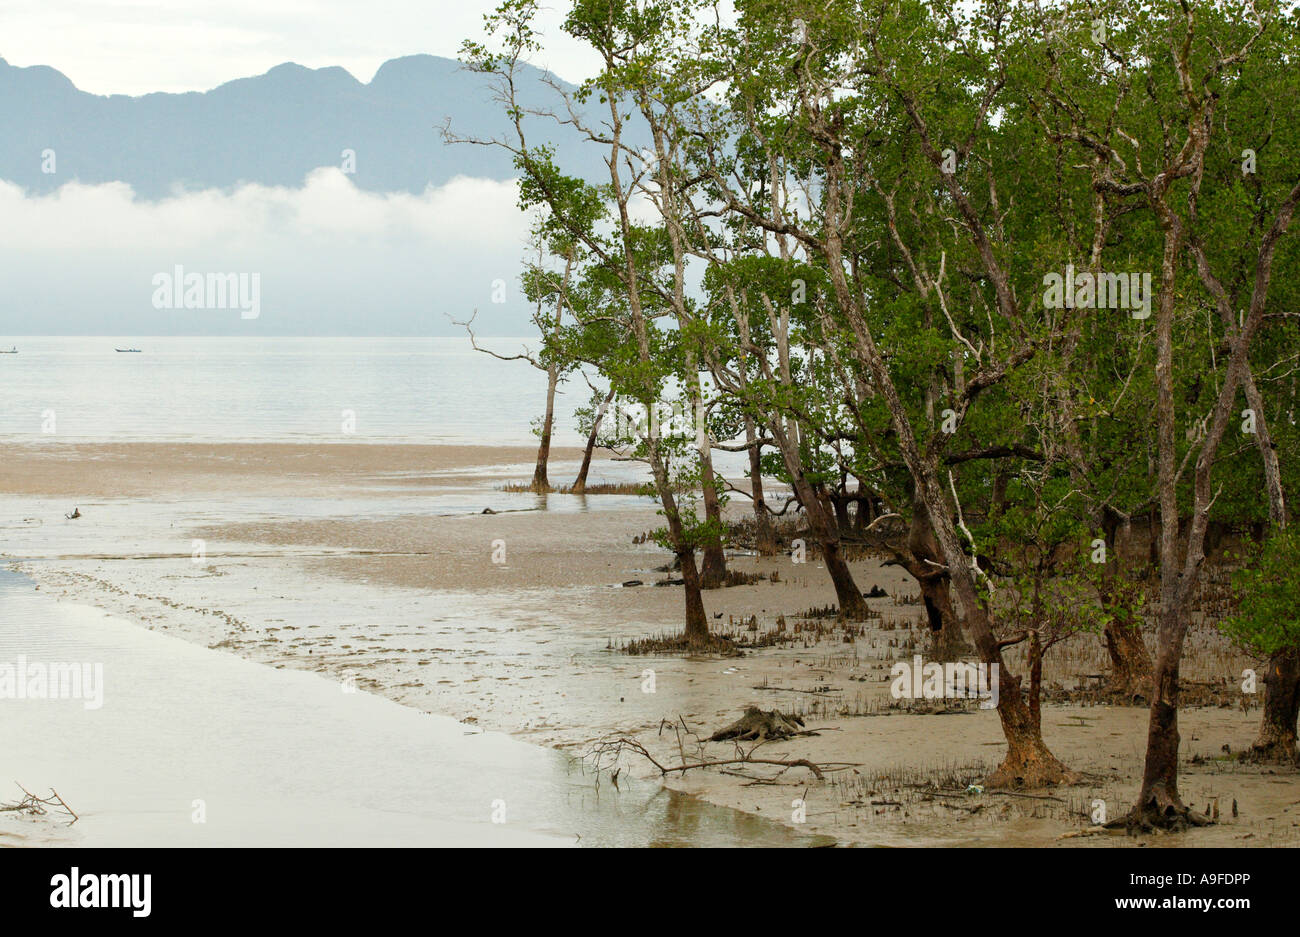 Asia, Malaysia, Borneo, river flowing through mangrove swamp Stock Photo